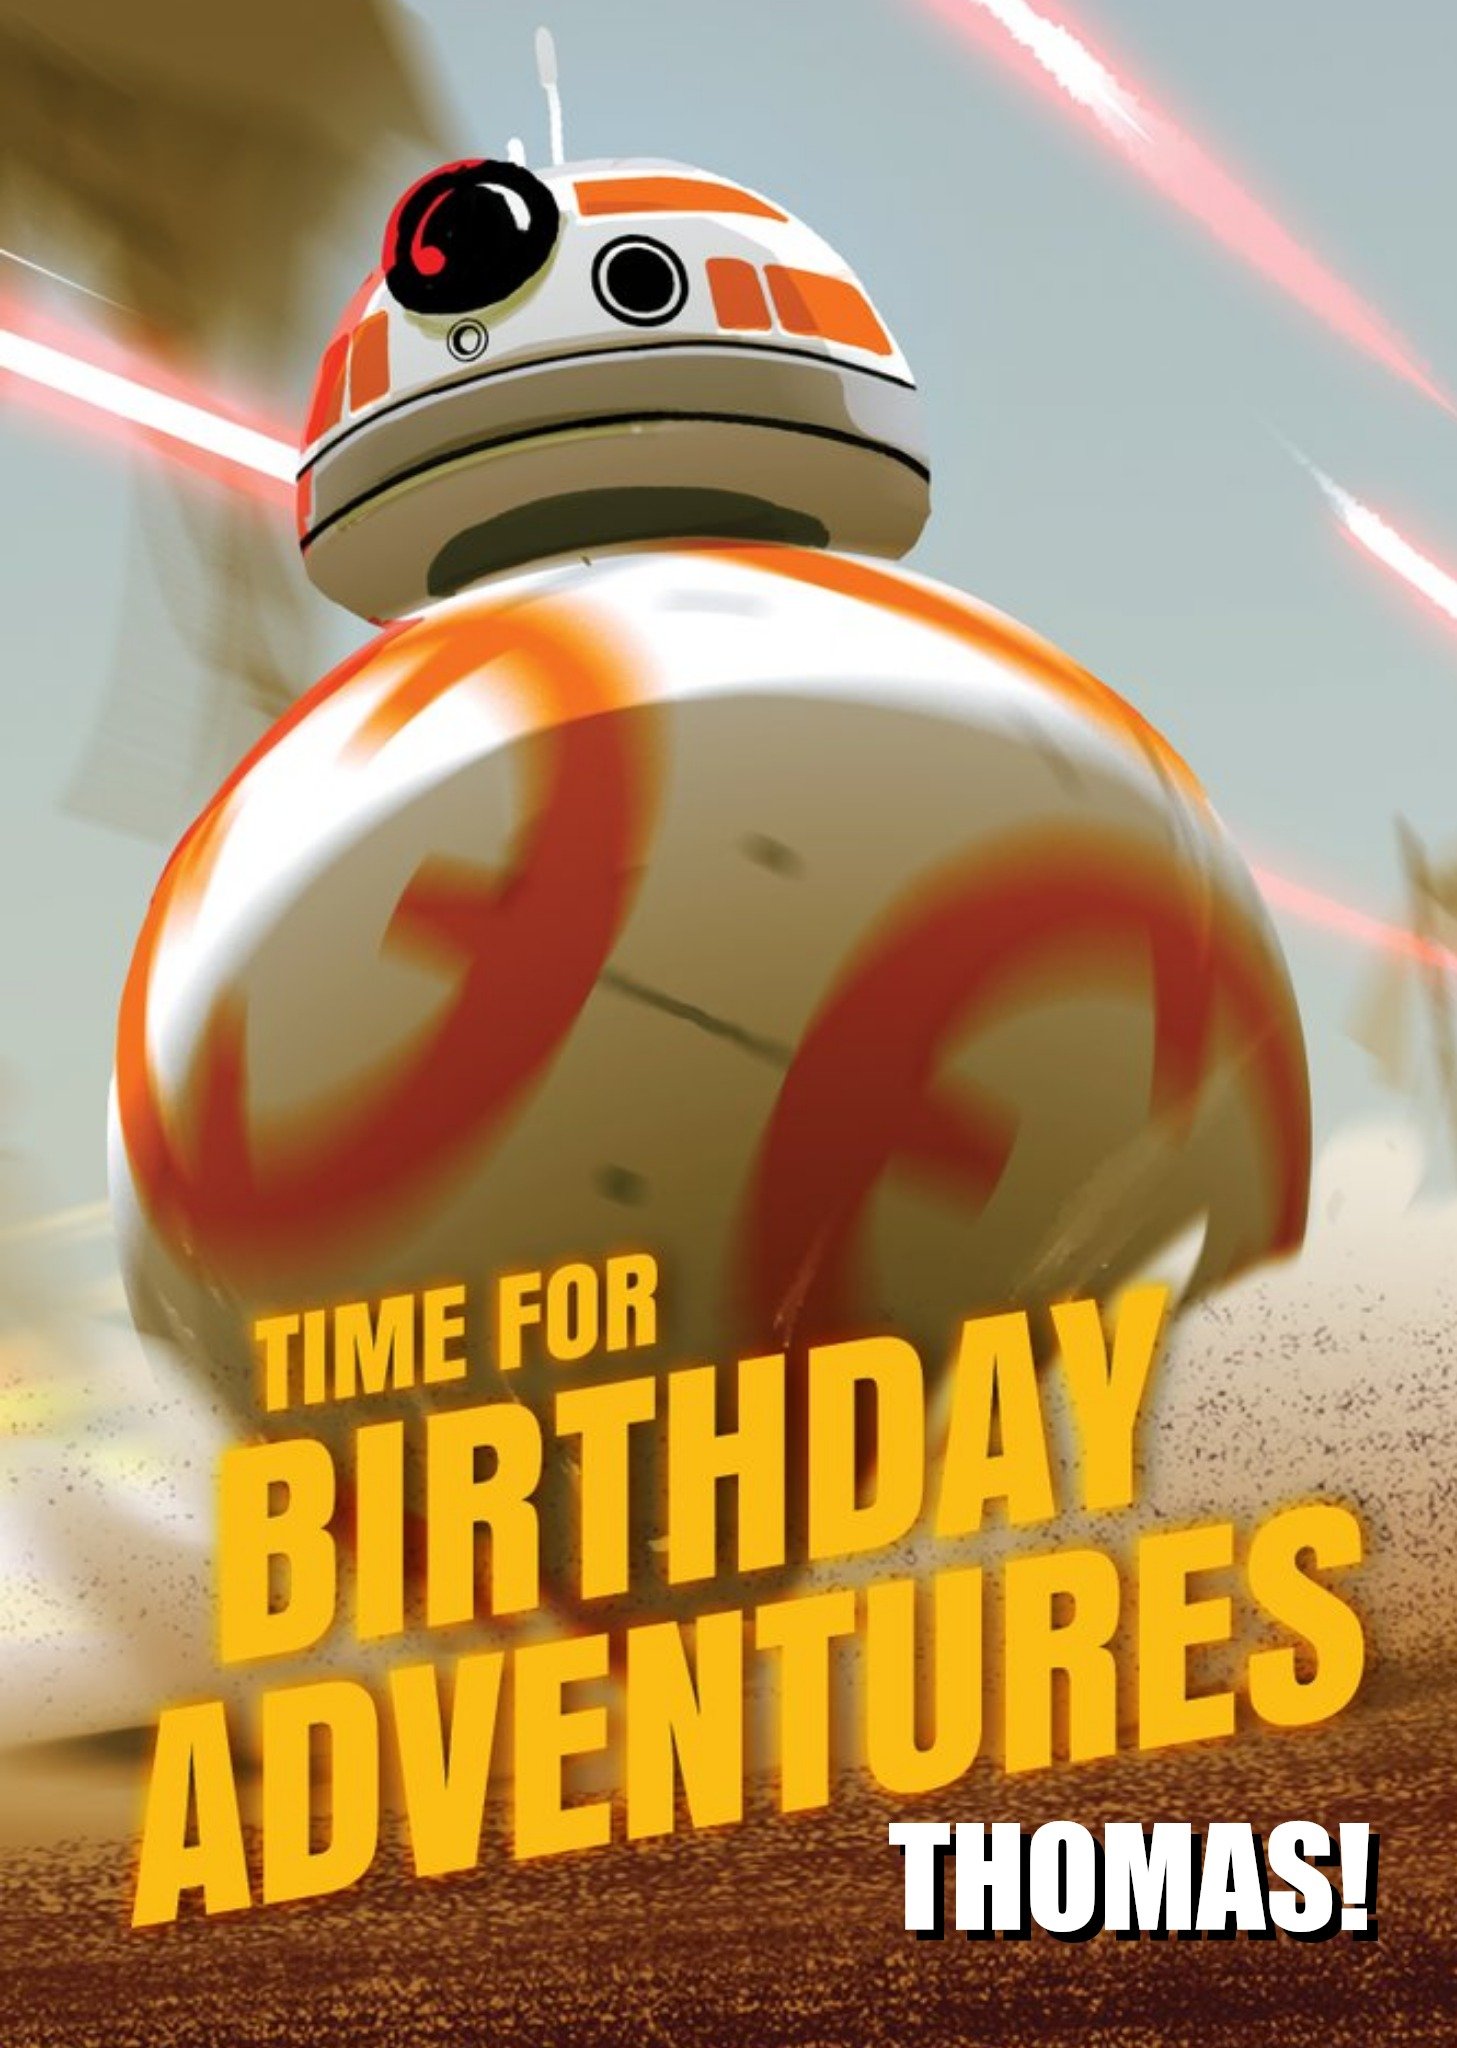 Disney Star Wars Bb-8 Birthday Adventures Card Ecard